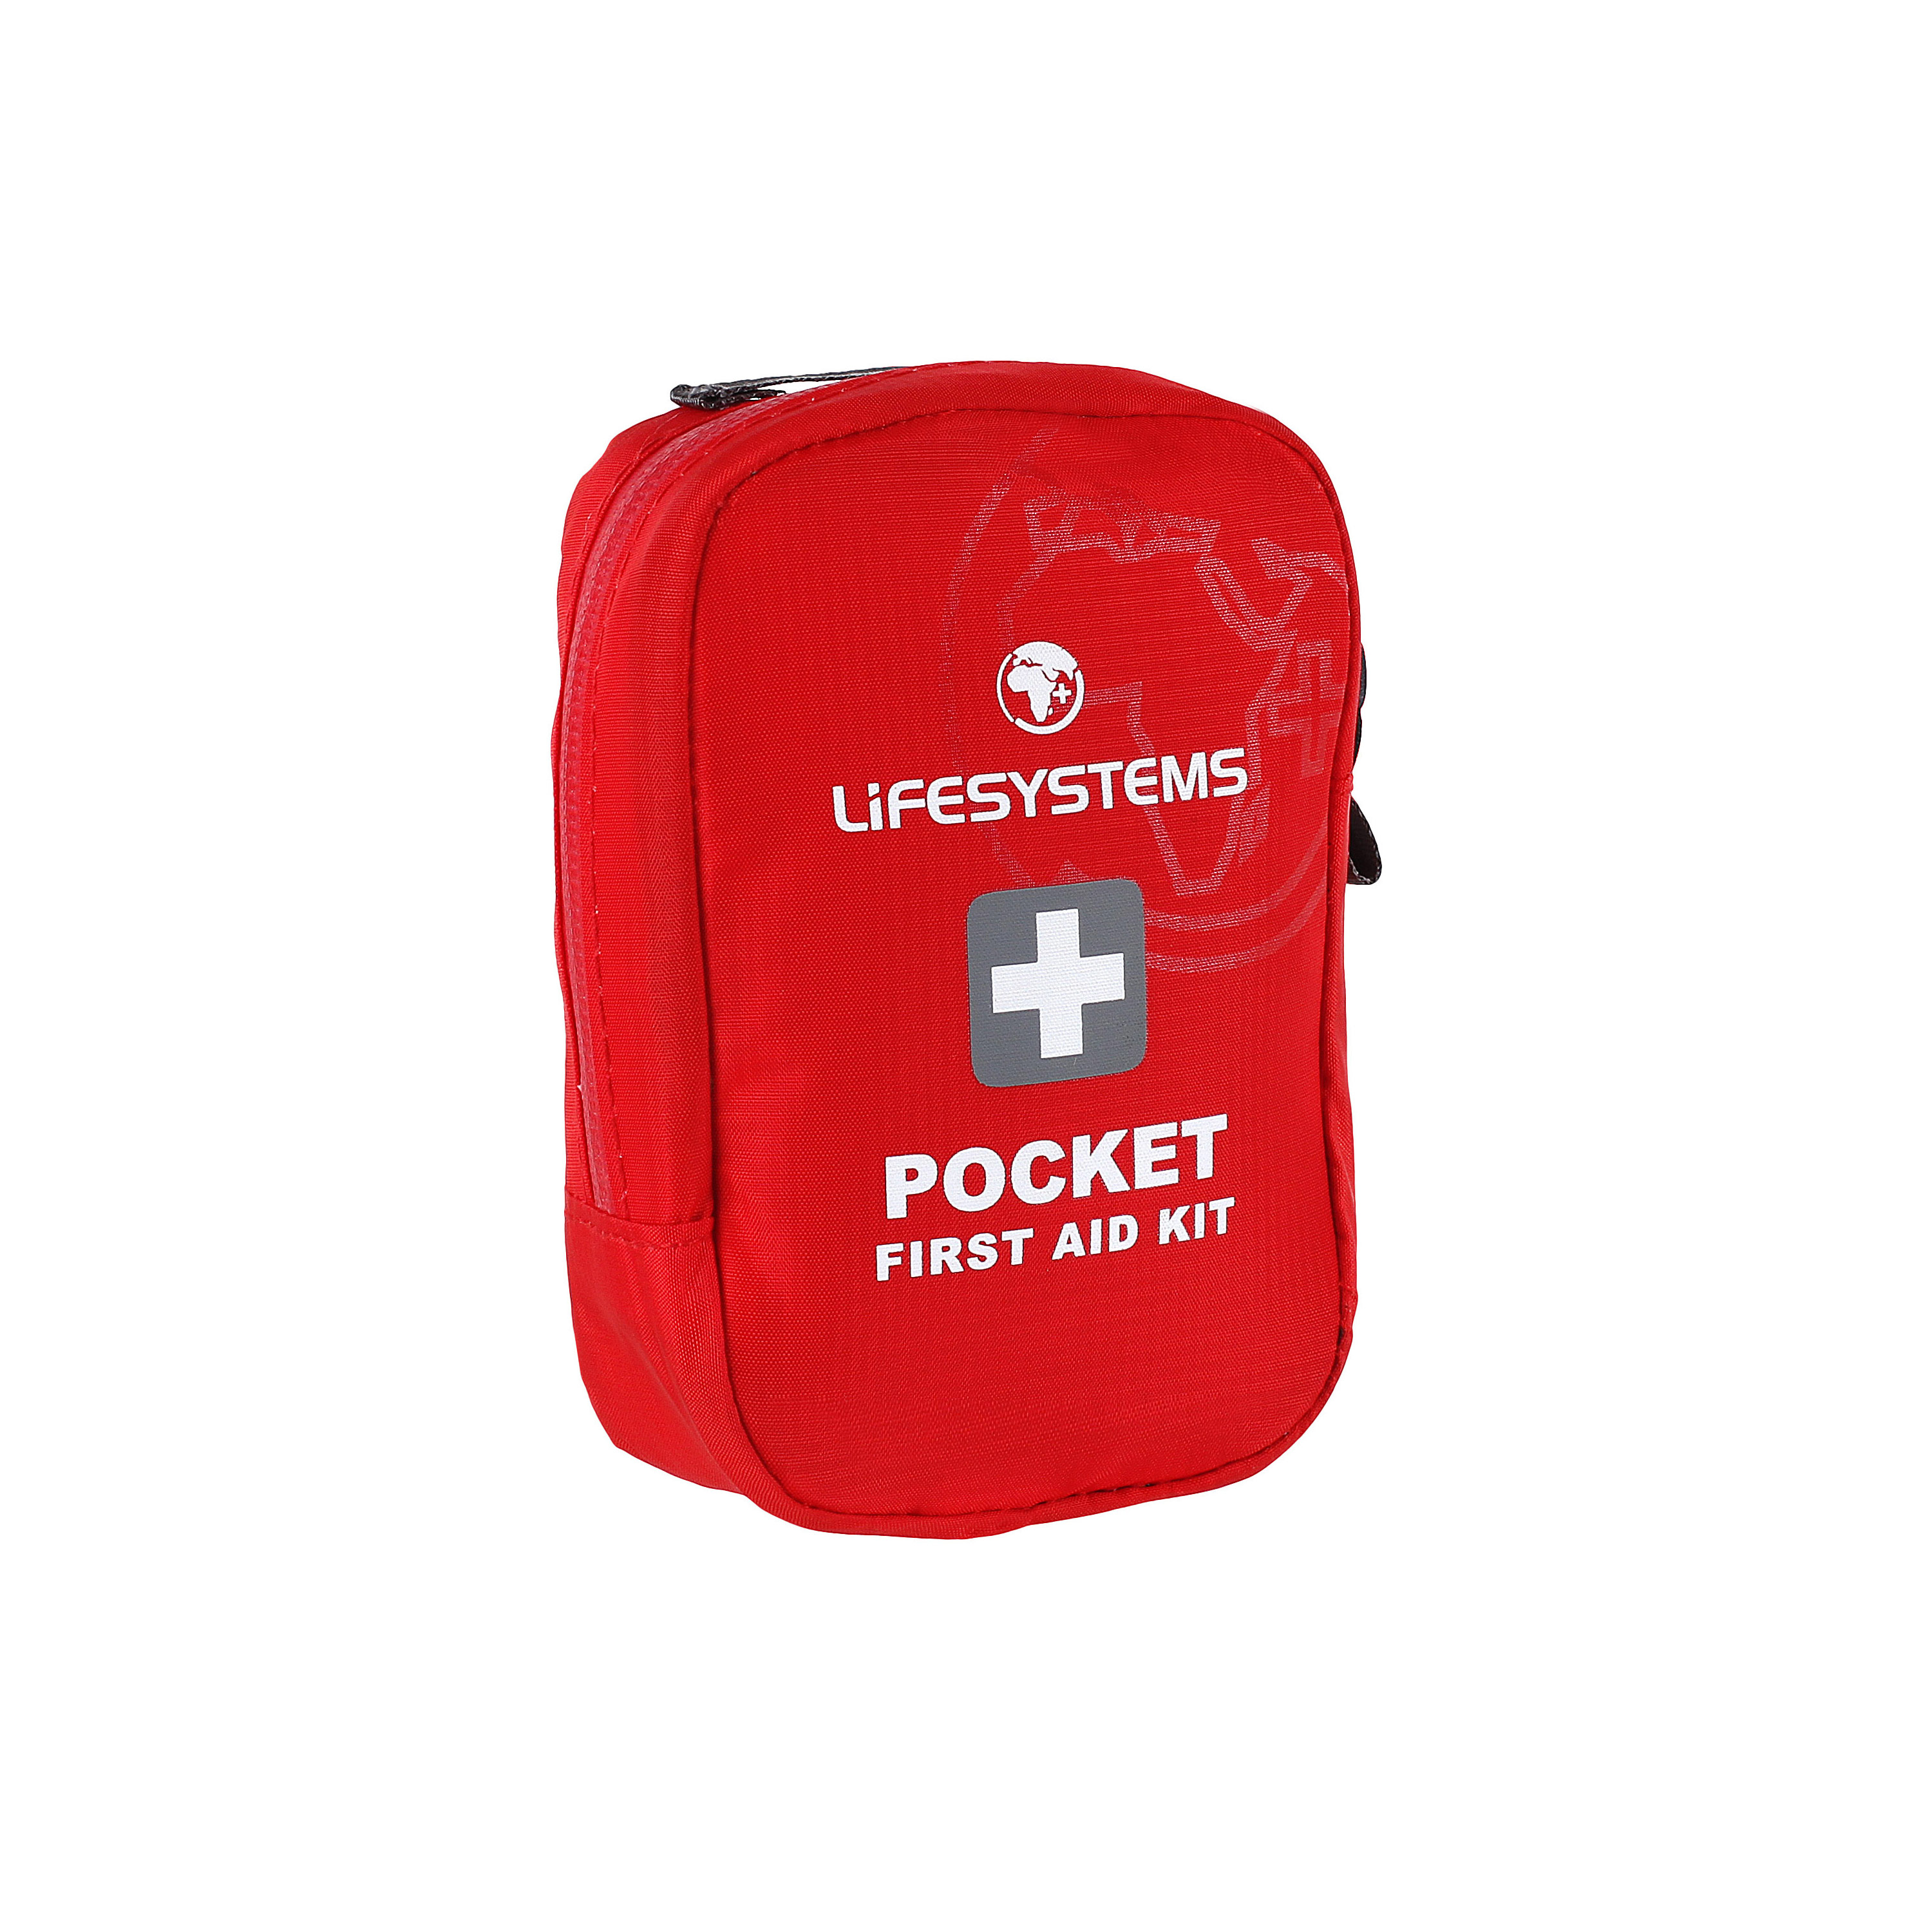 Lifesystems(r) Pocket First Aid Kit